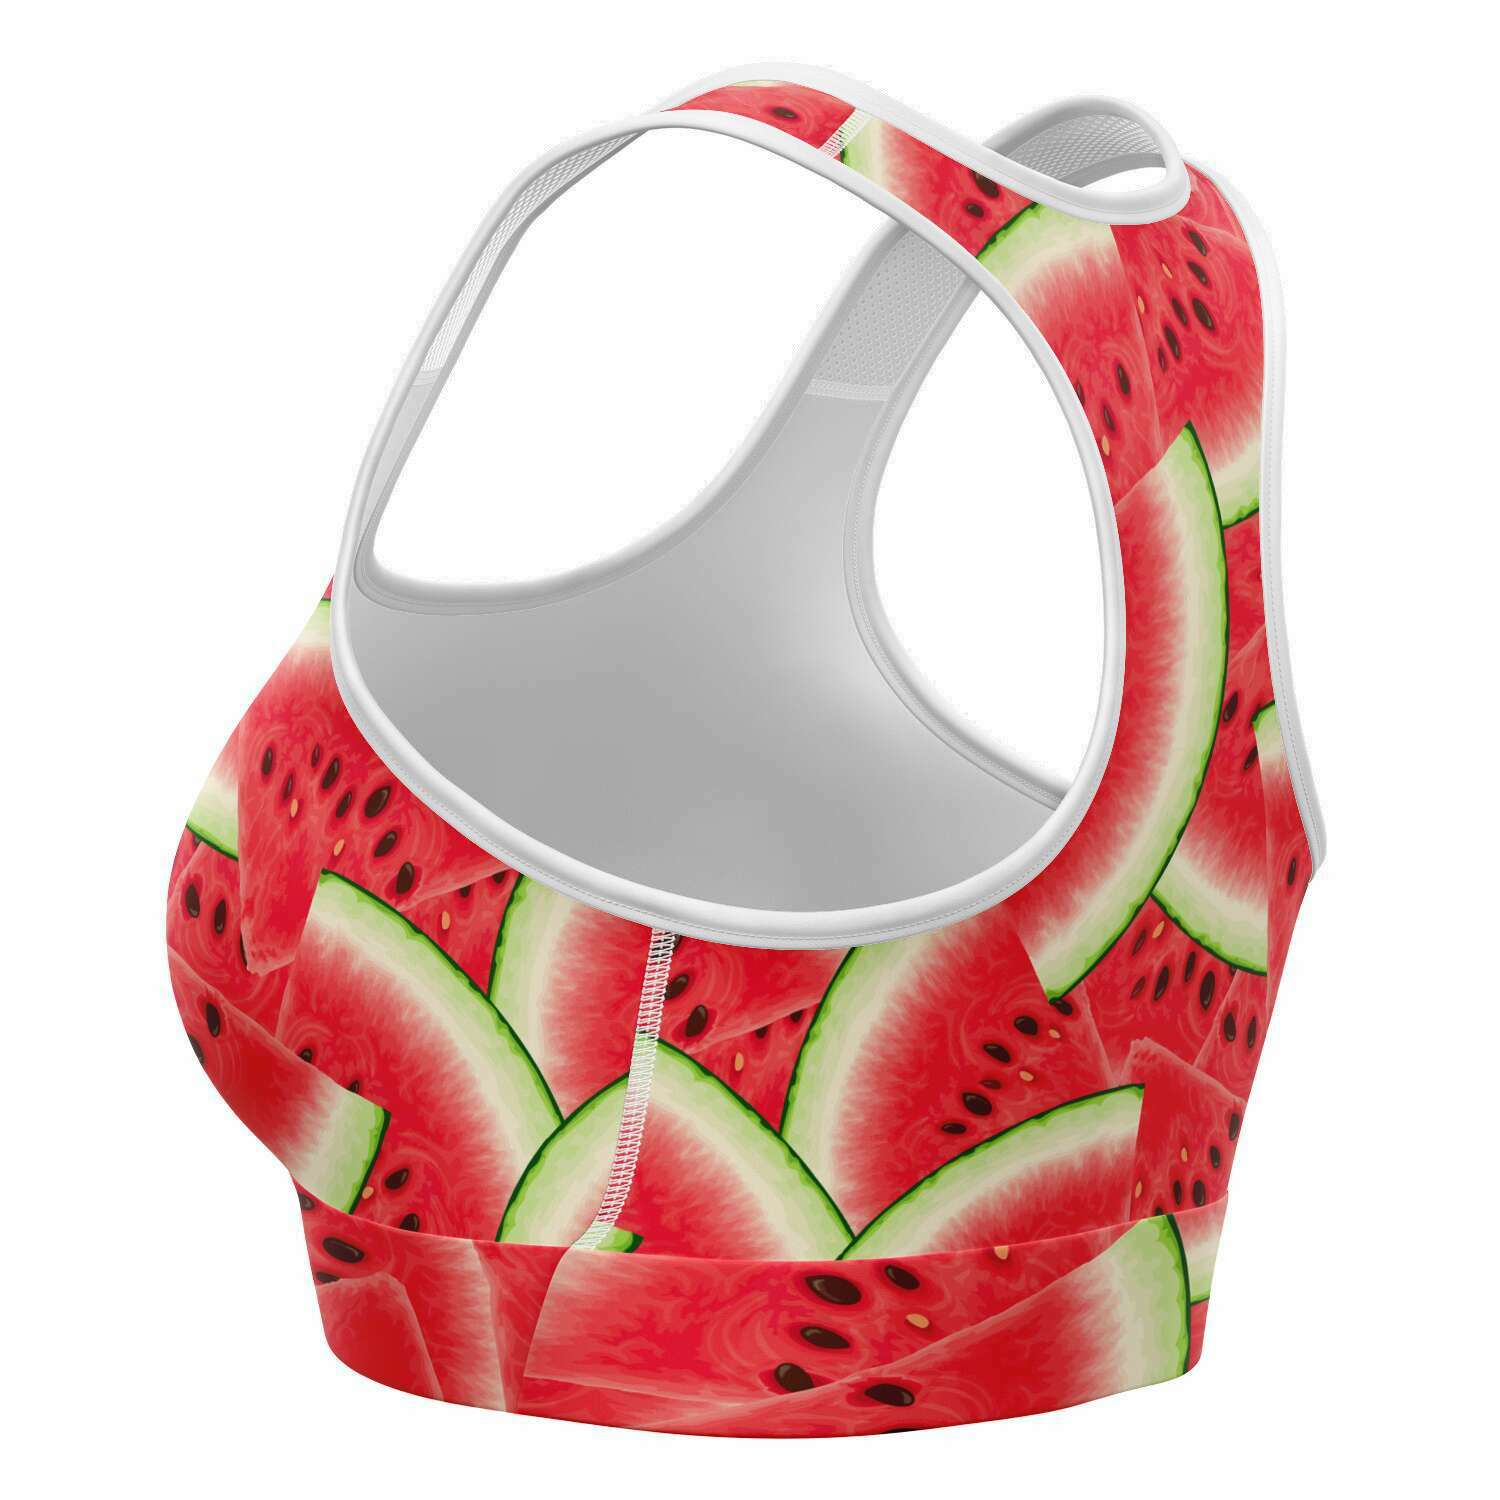 Women's Juicy Watermelon Slices Athletic Sports Bra Left